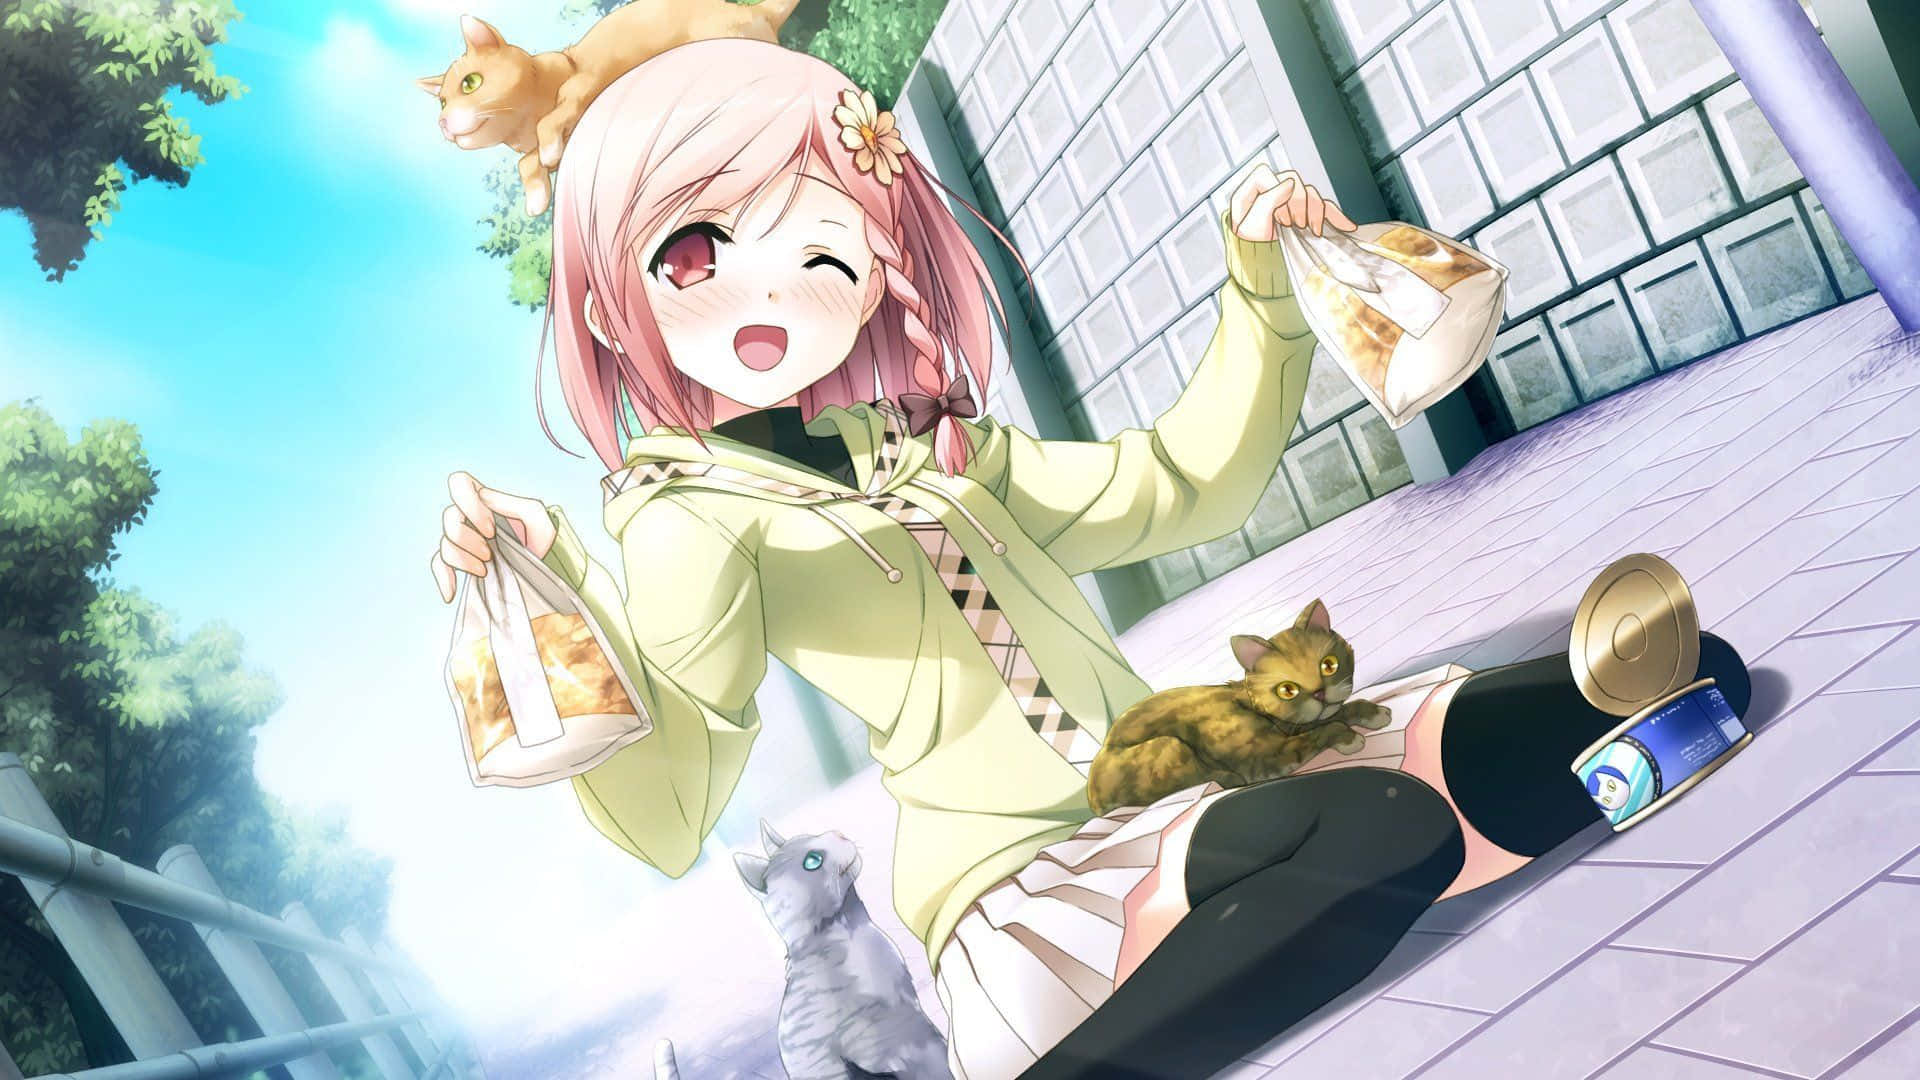 Cutecore Girl Feeding Cats Anime Art.jpg Wallpaper